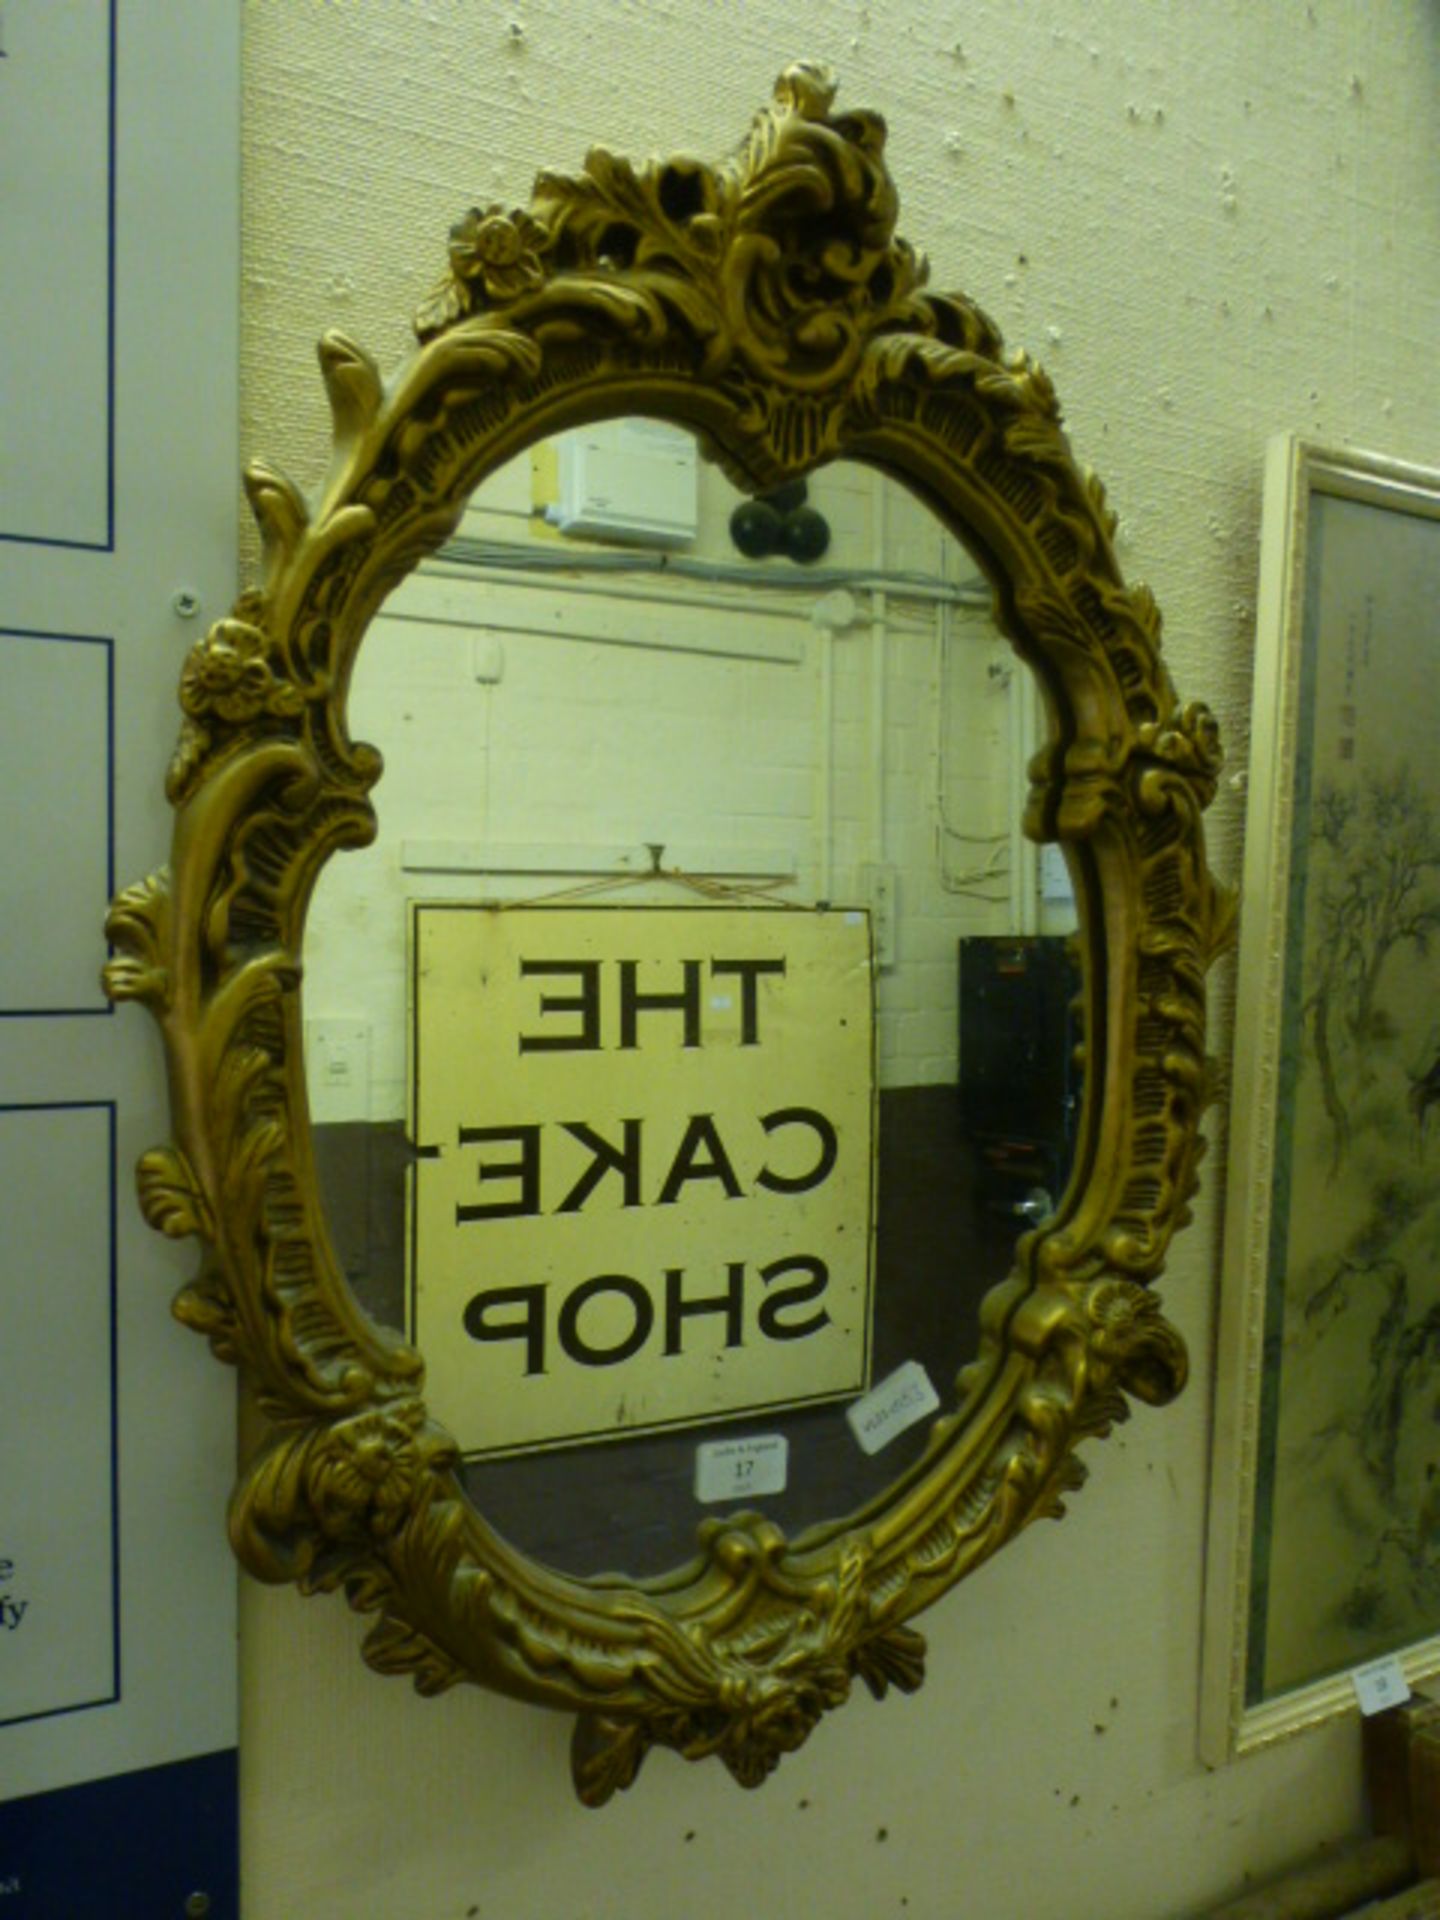 An ornate gilt framed wall mirror